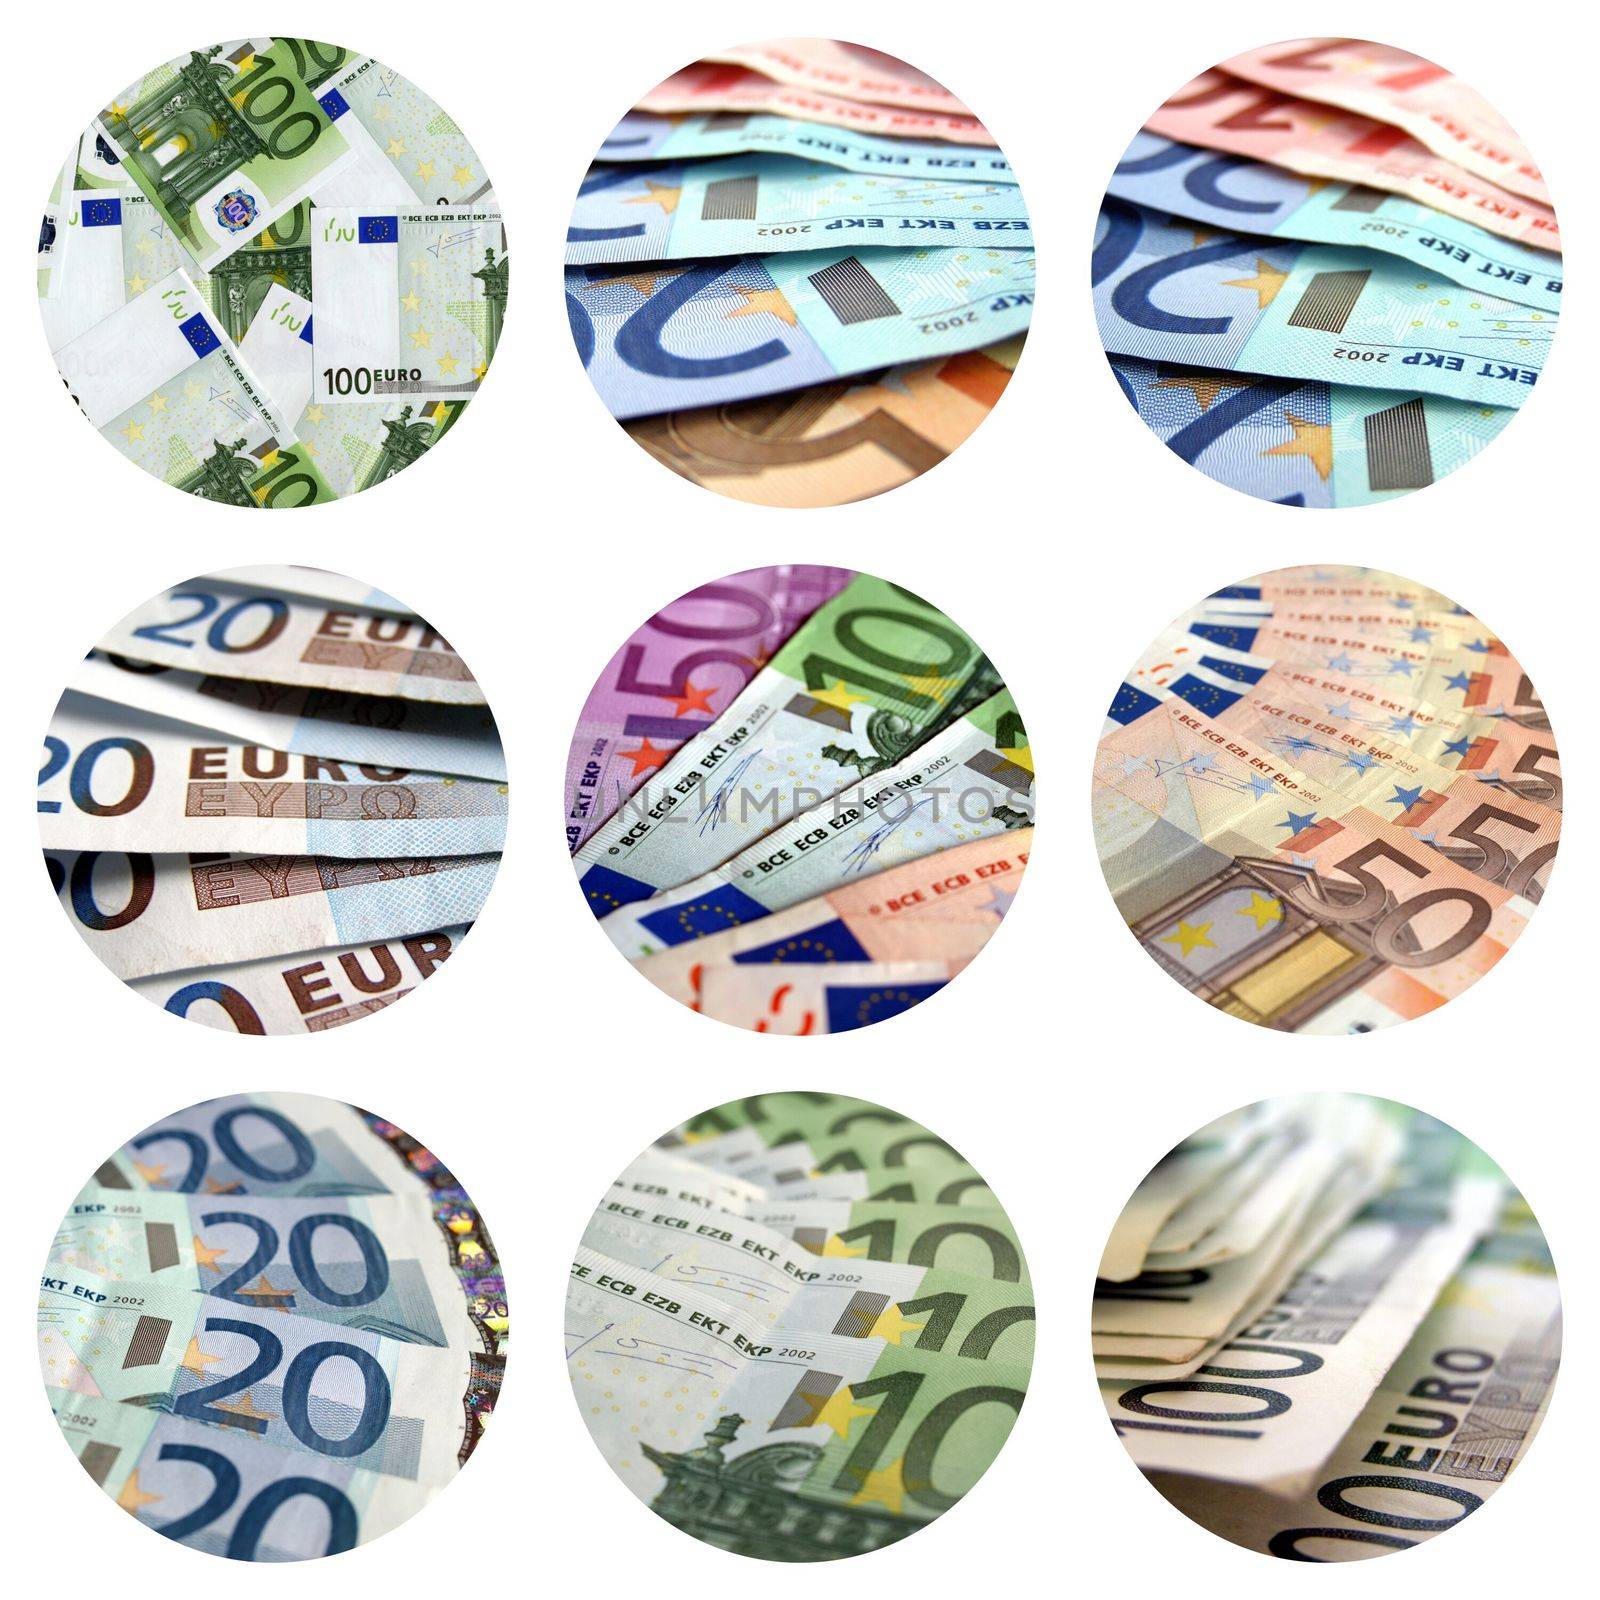 Euro money collage by claudiodivizia